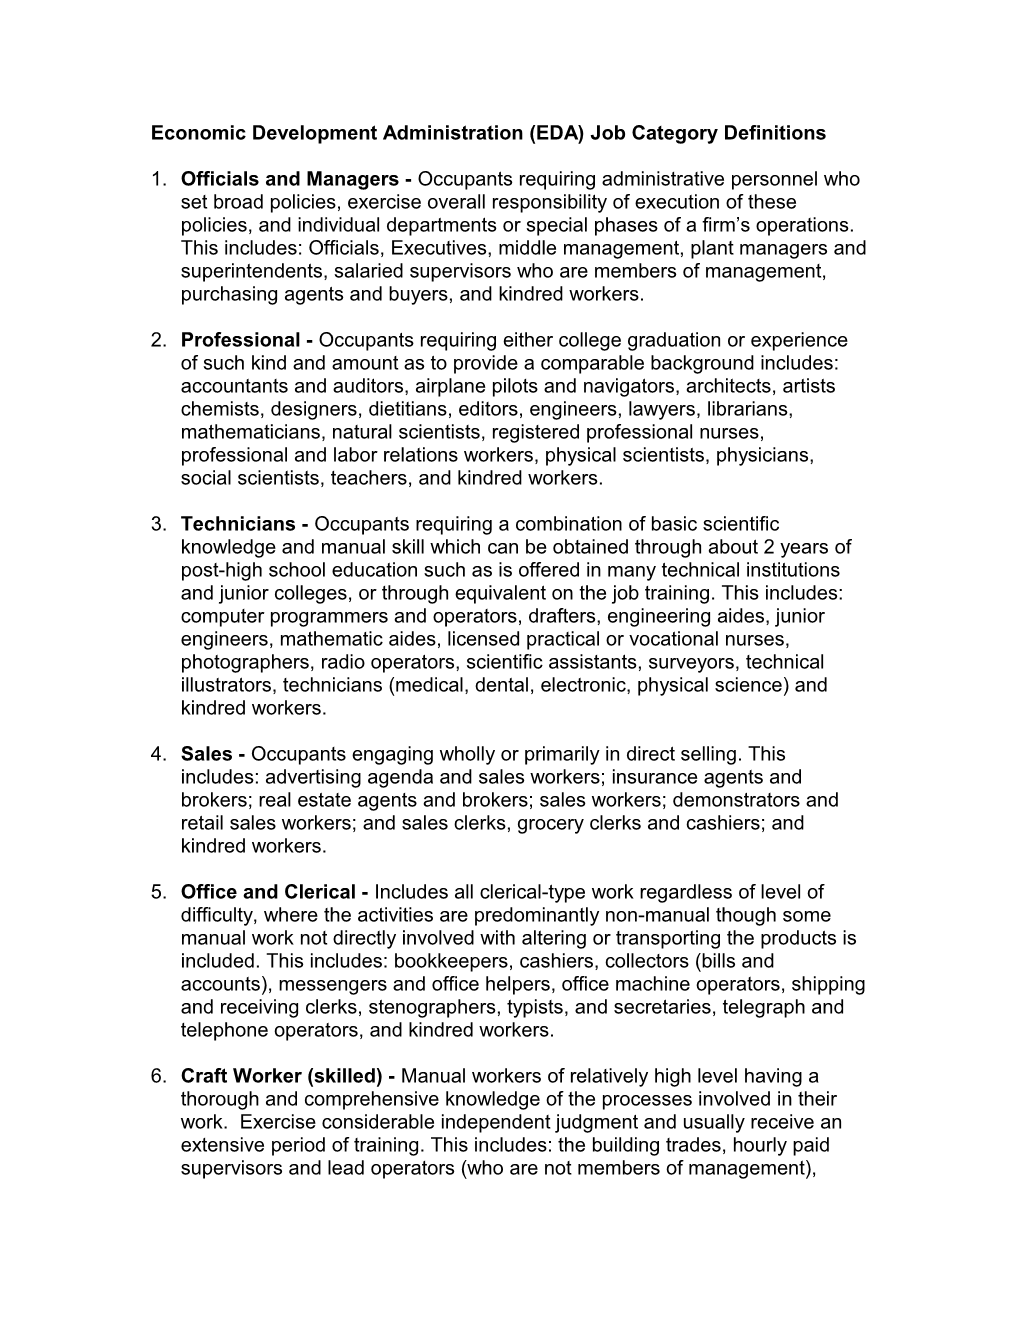 EDA Job Category Definitions